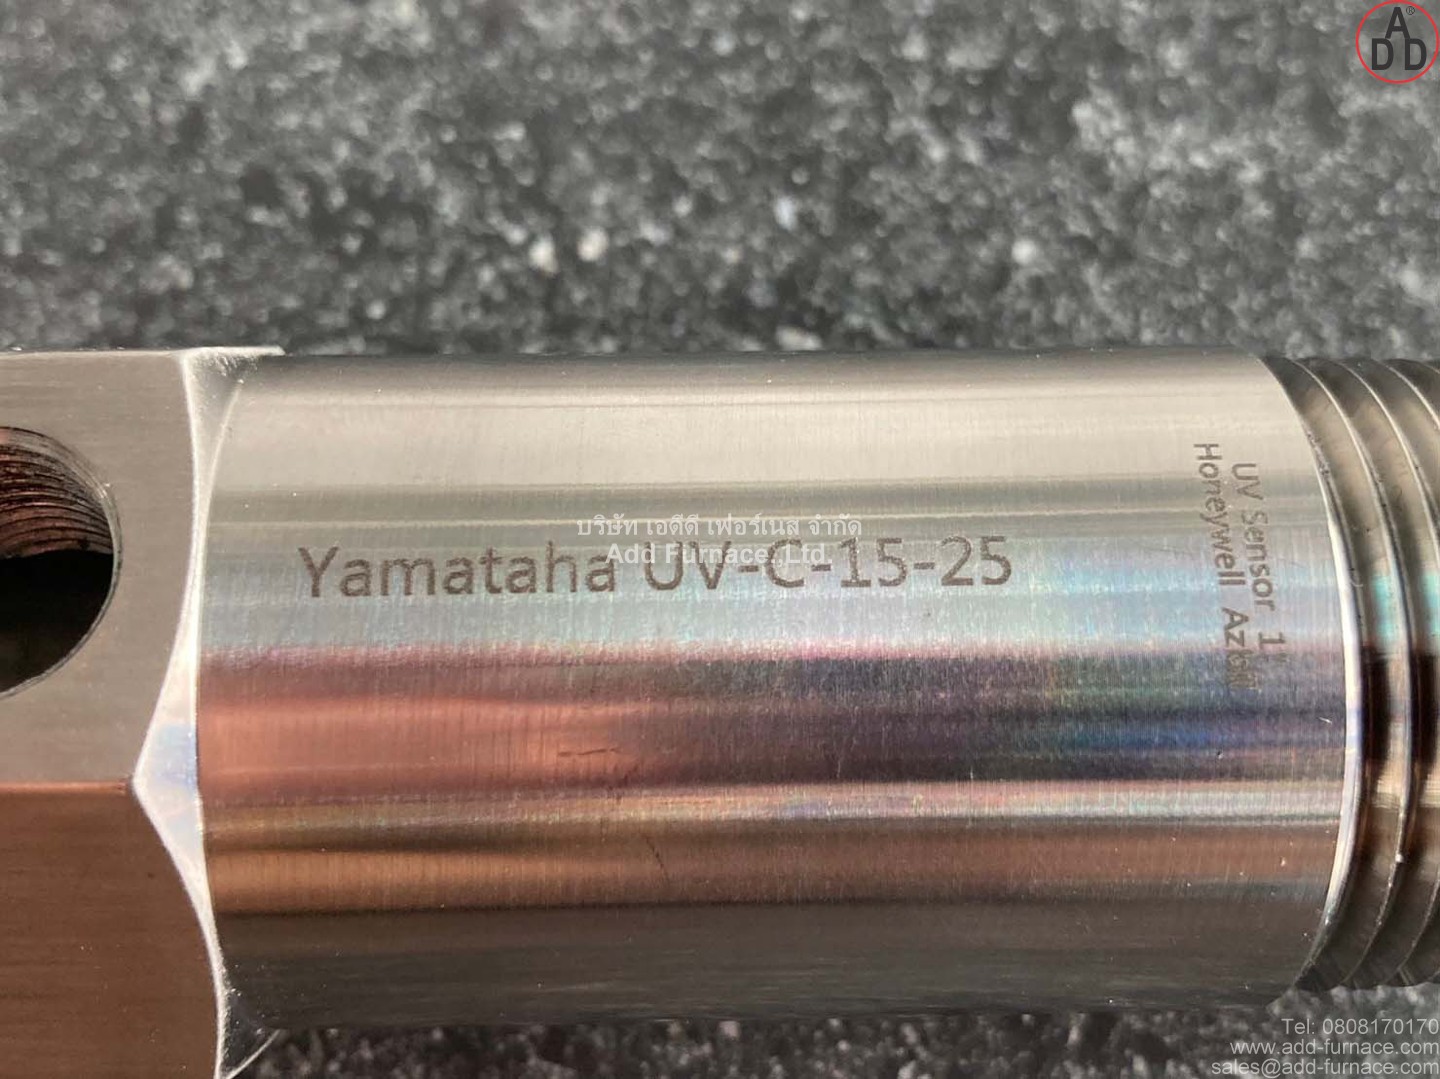 Yamataha UV-C-15-25(3)